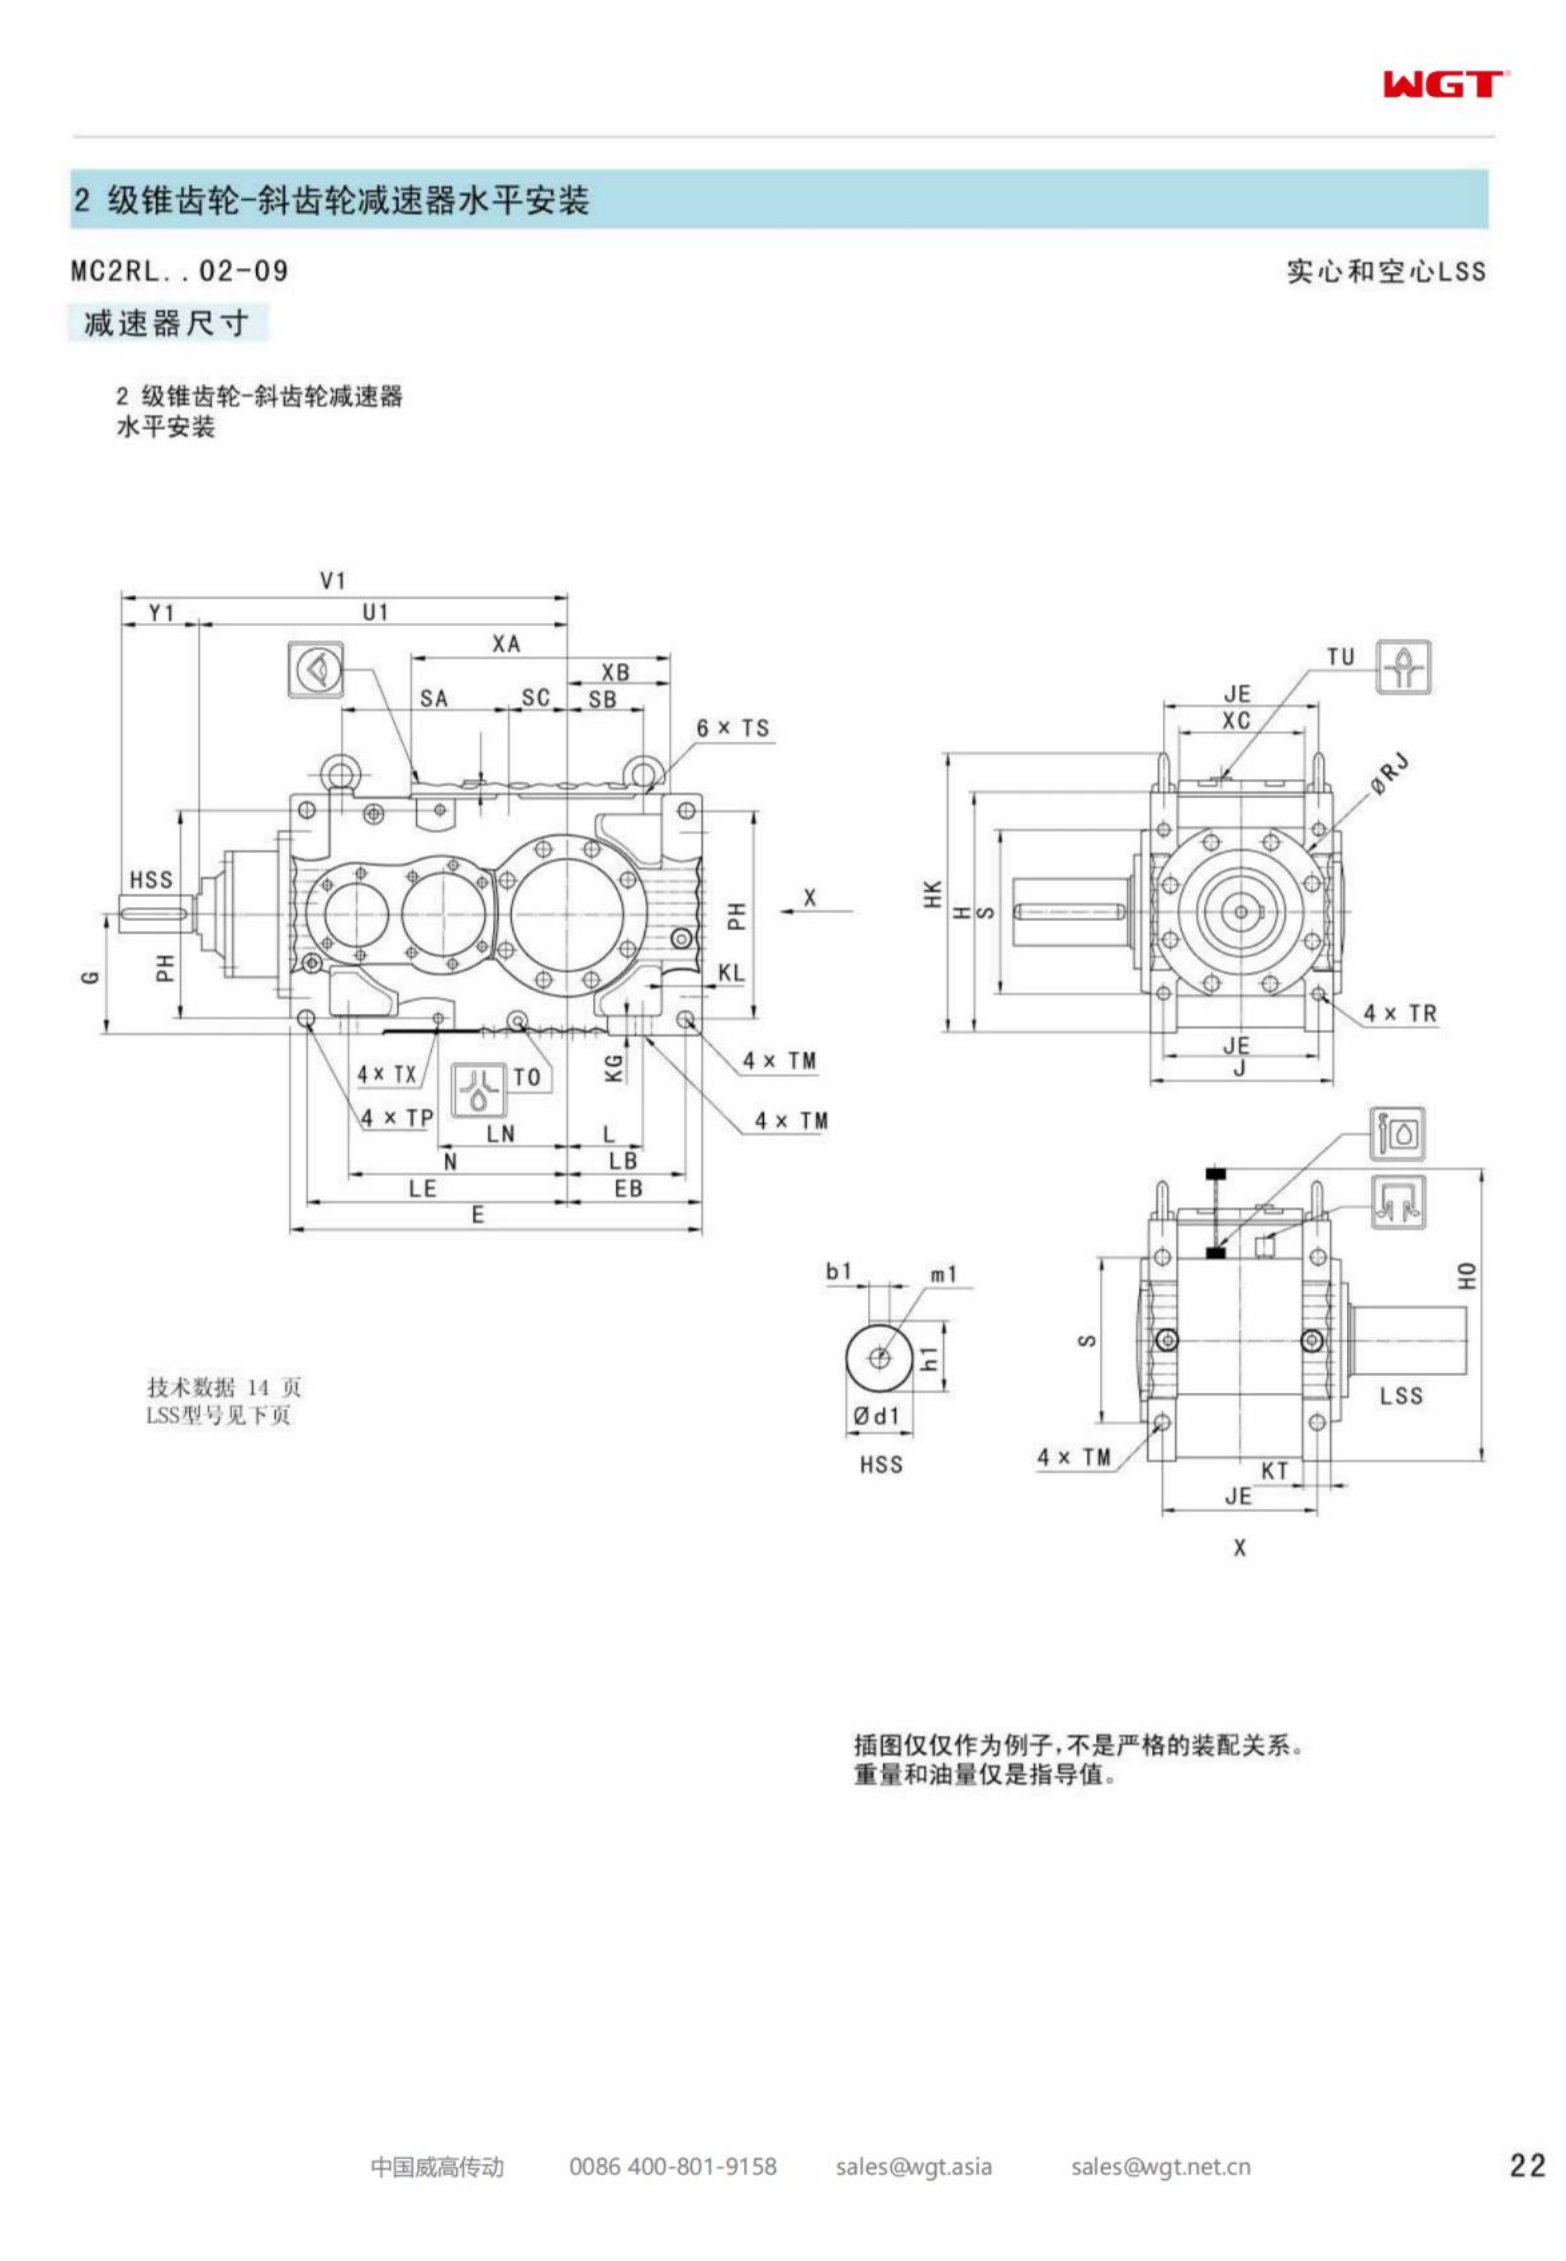 MC2RLHF09 replaces _SEW_MC_Series gearbox (patent)